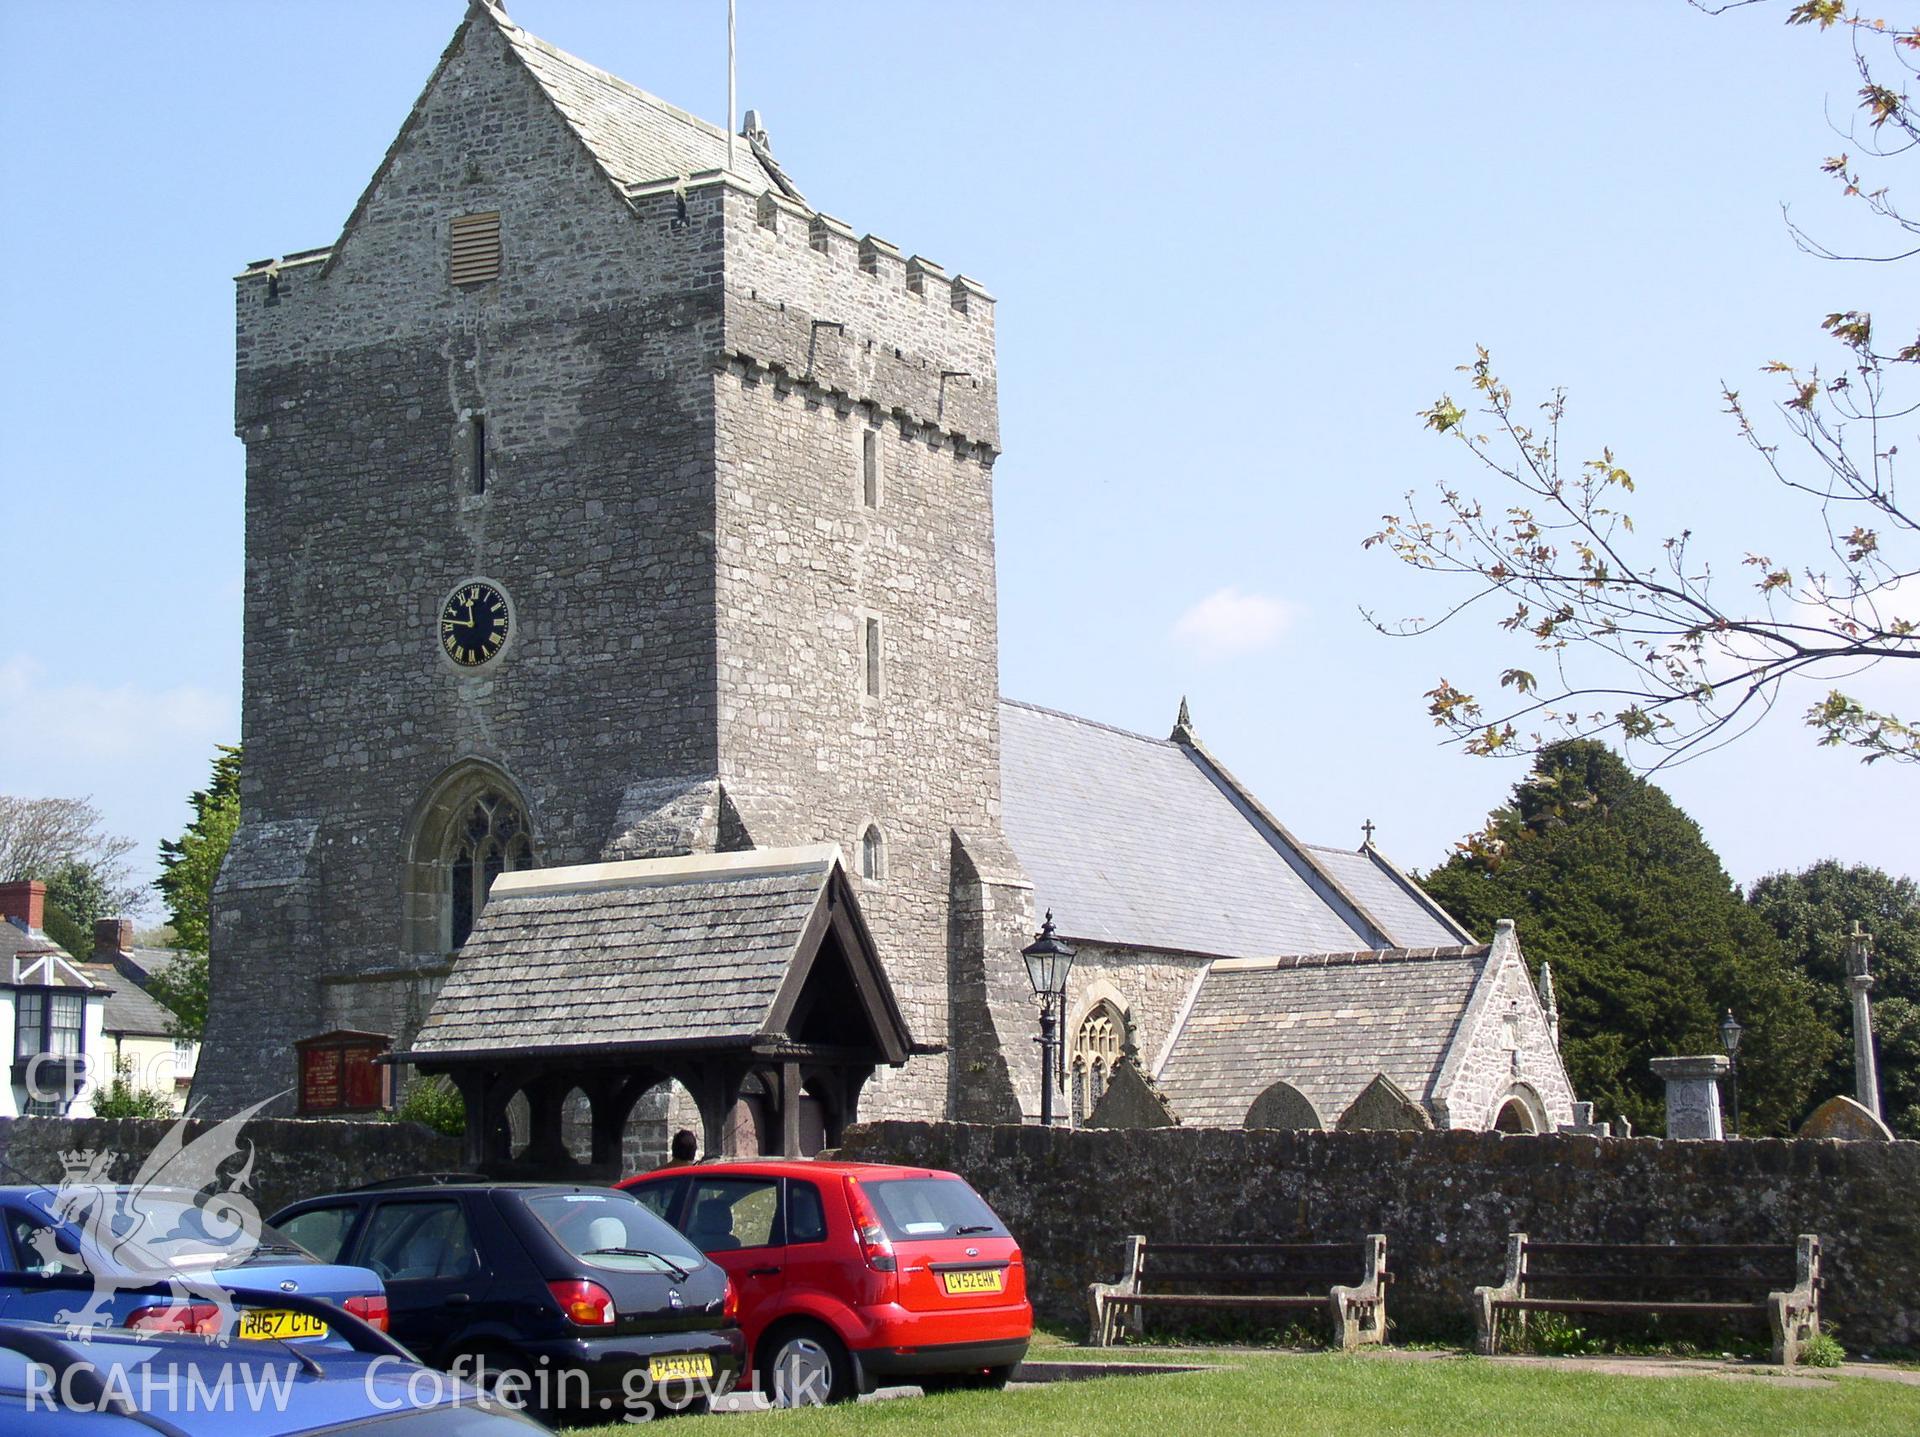 Colour digital photograph showing the exterior of St John the Baptist's Church, Mountain Ash; Glamorgan.